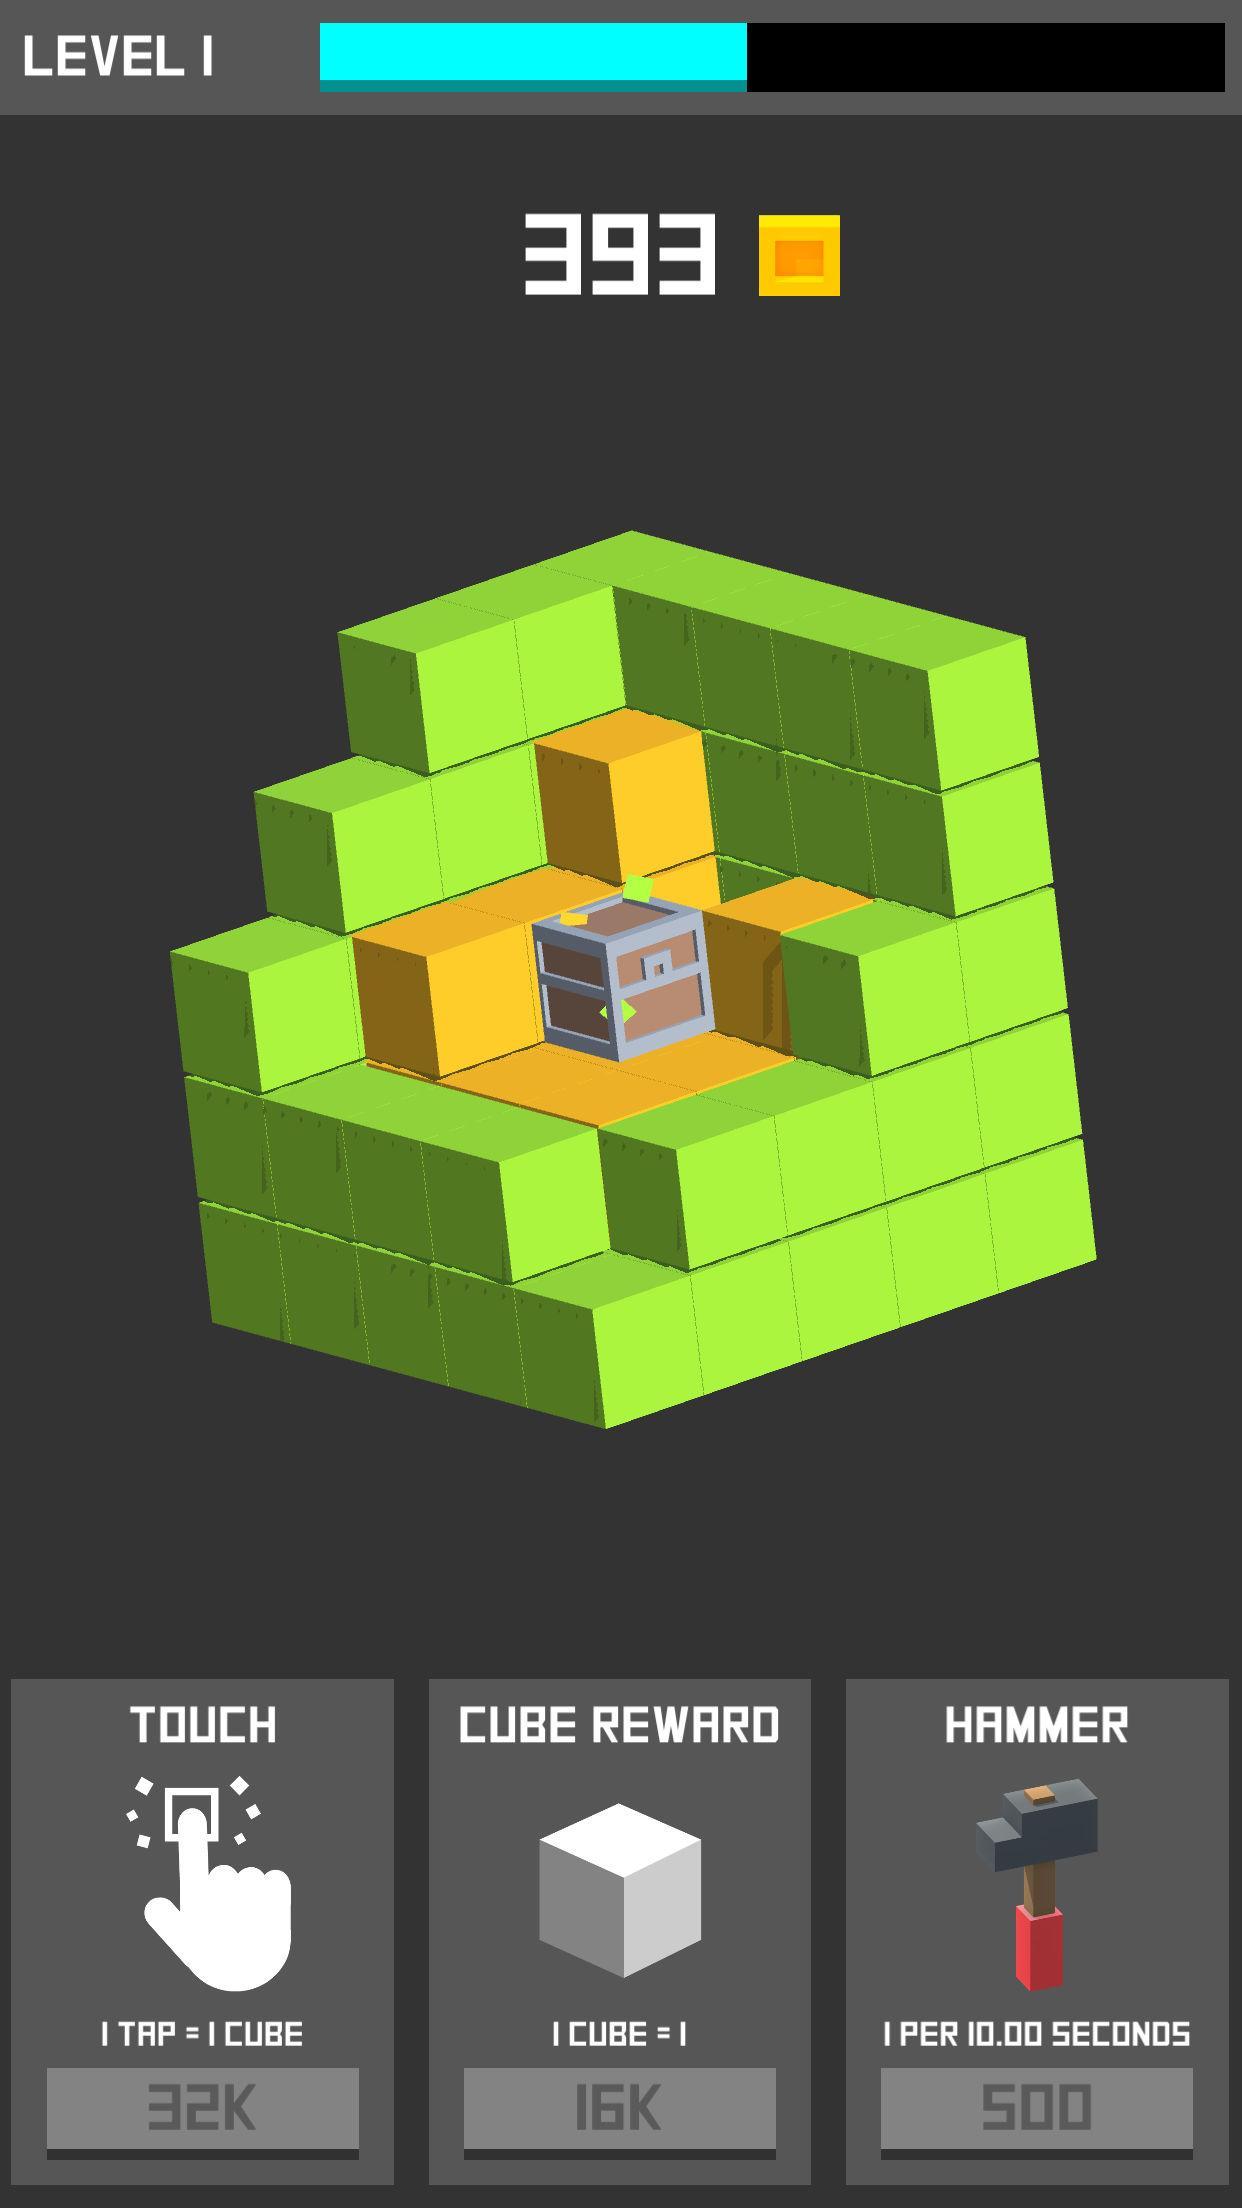 Cube download. Cube (игра). Игры с кубиками на андроид. Игра куб на андроид. Кубические игры на андроид.